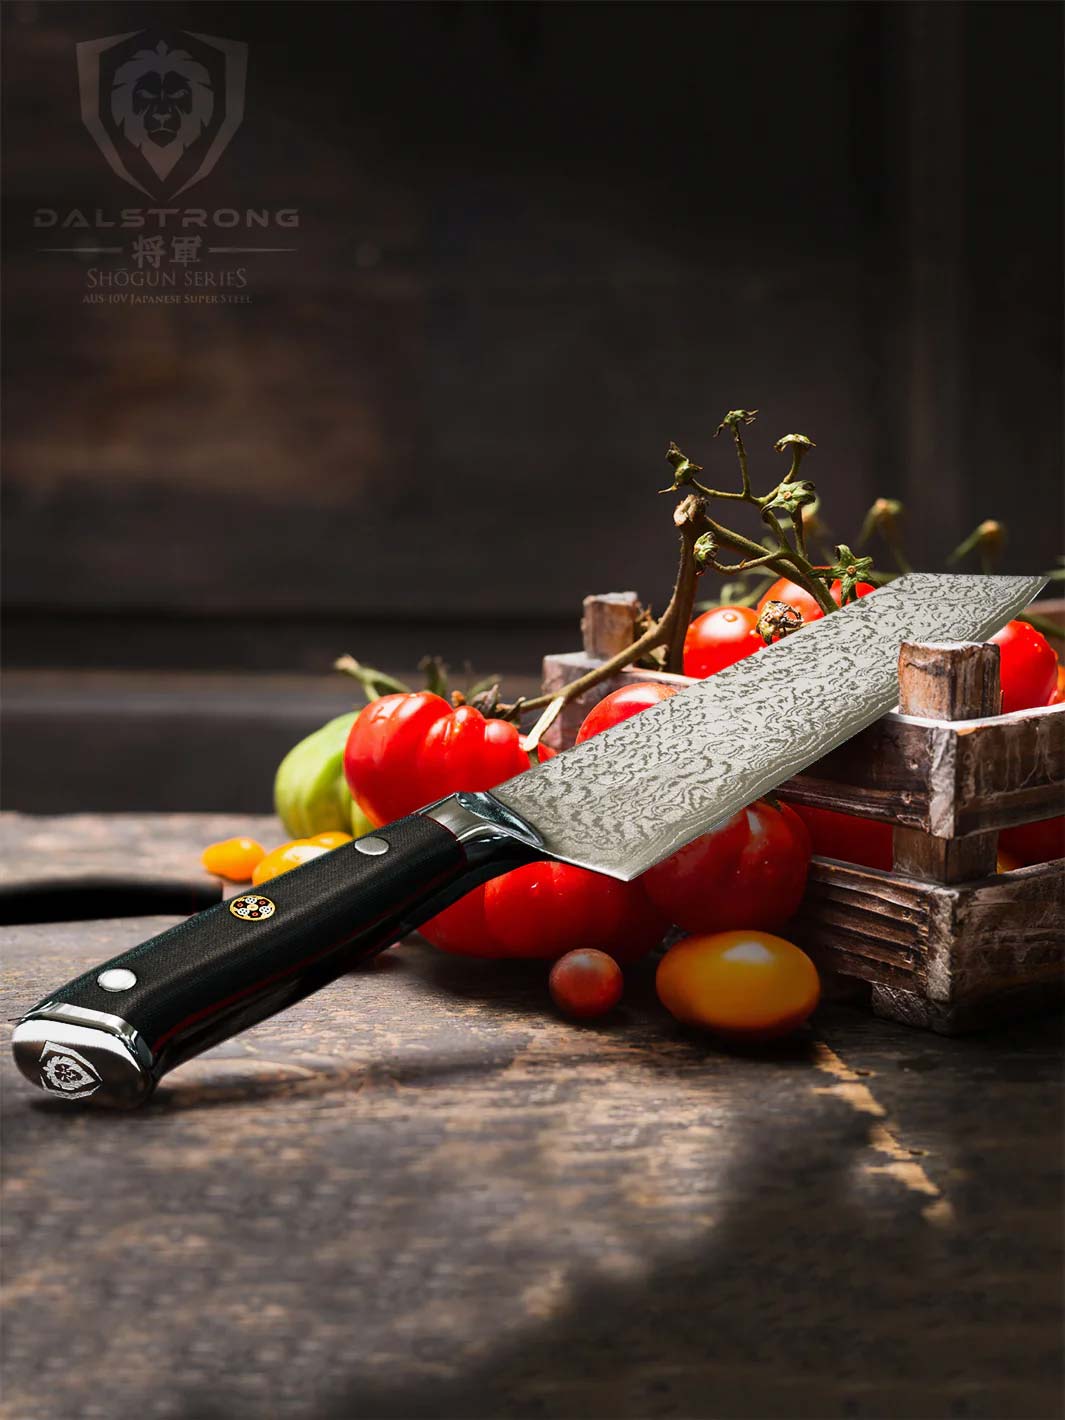  Dalstrong Kiritsuke Chef Knife - 8.5 inch - Gladiator